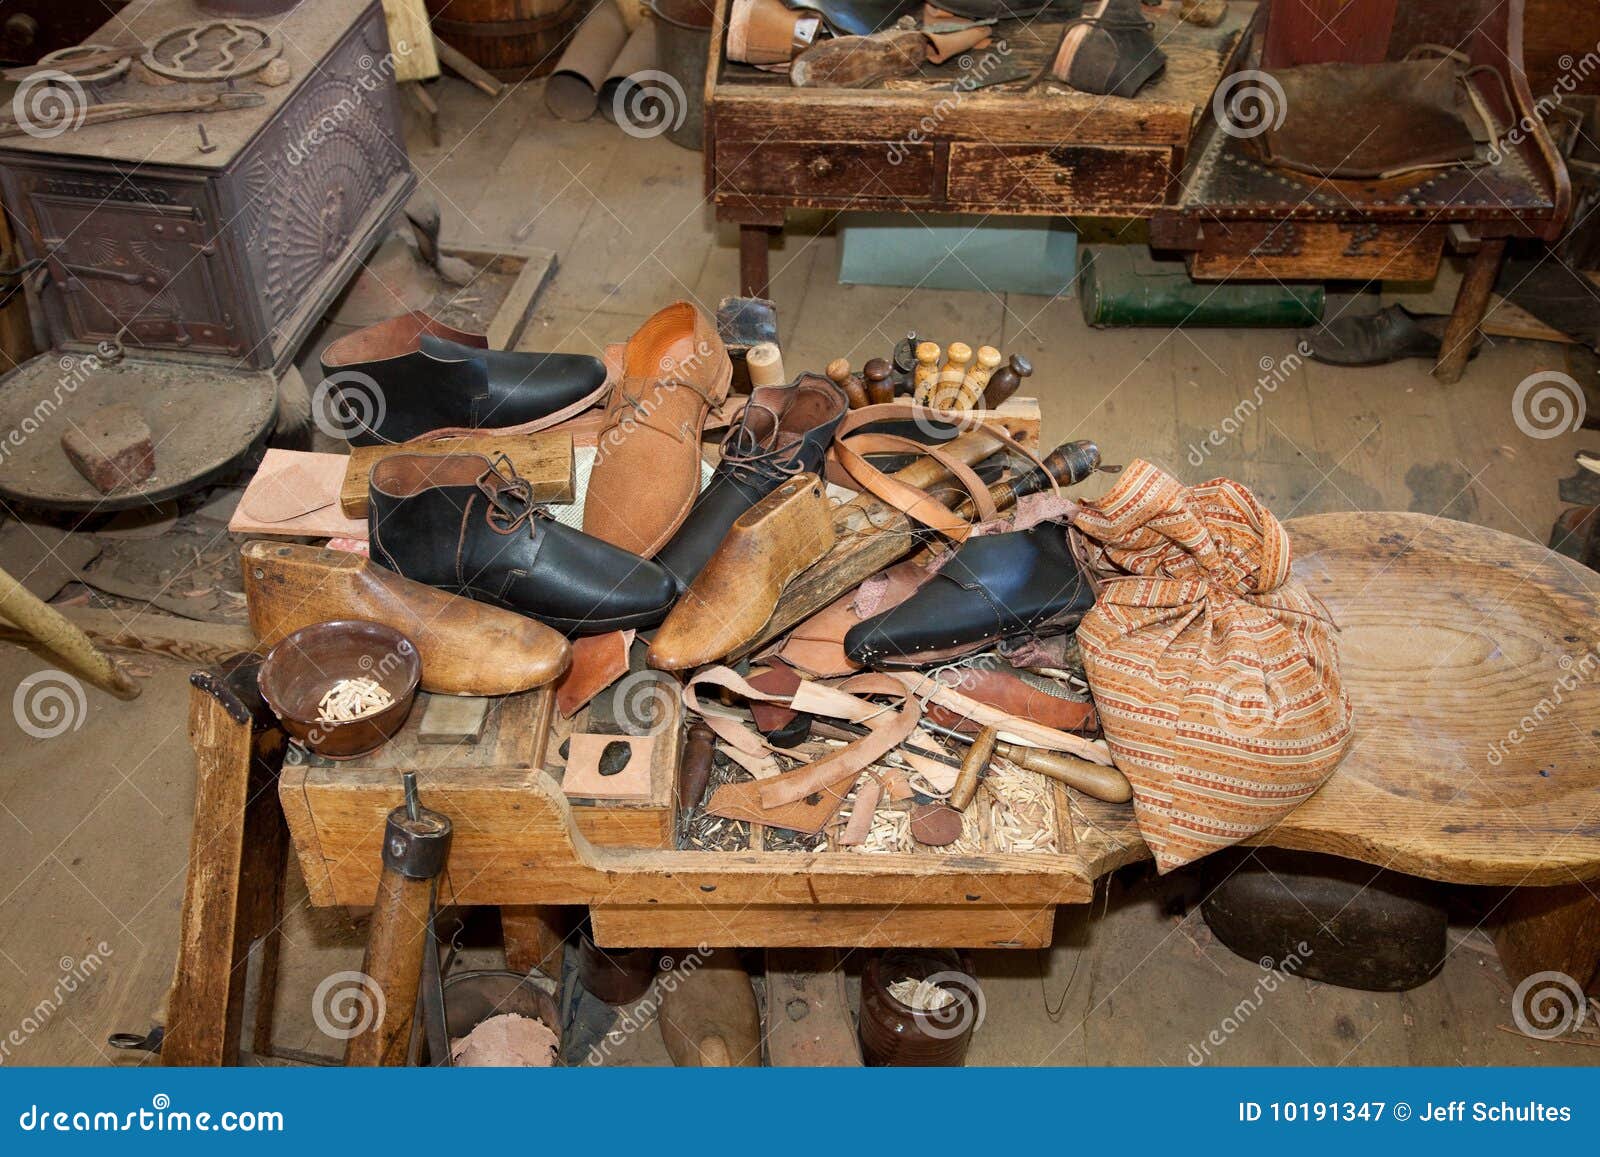 Vintage Shoe Repair Shop stock image 